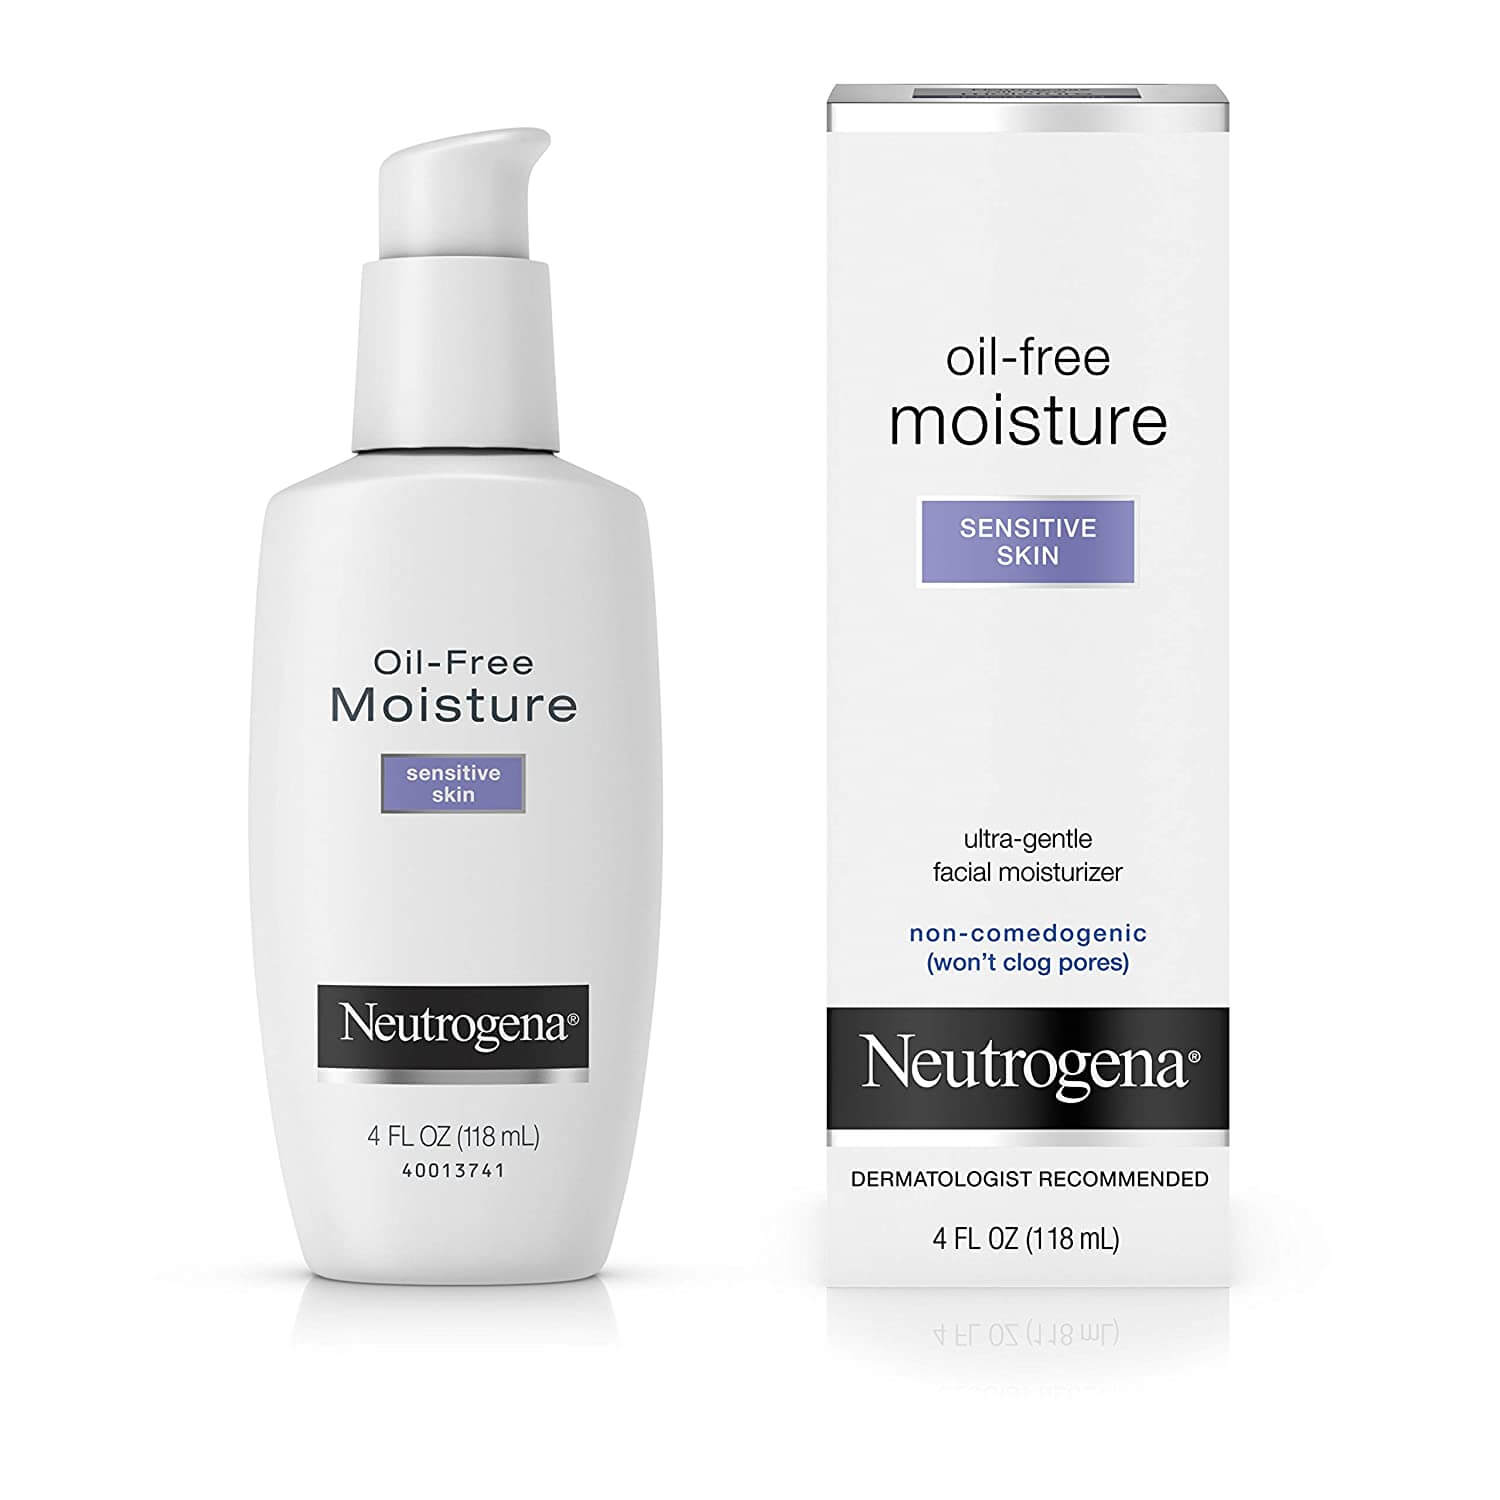 neutrogena oil free moisturizer price in pakistan